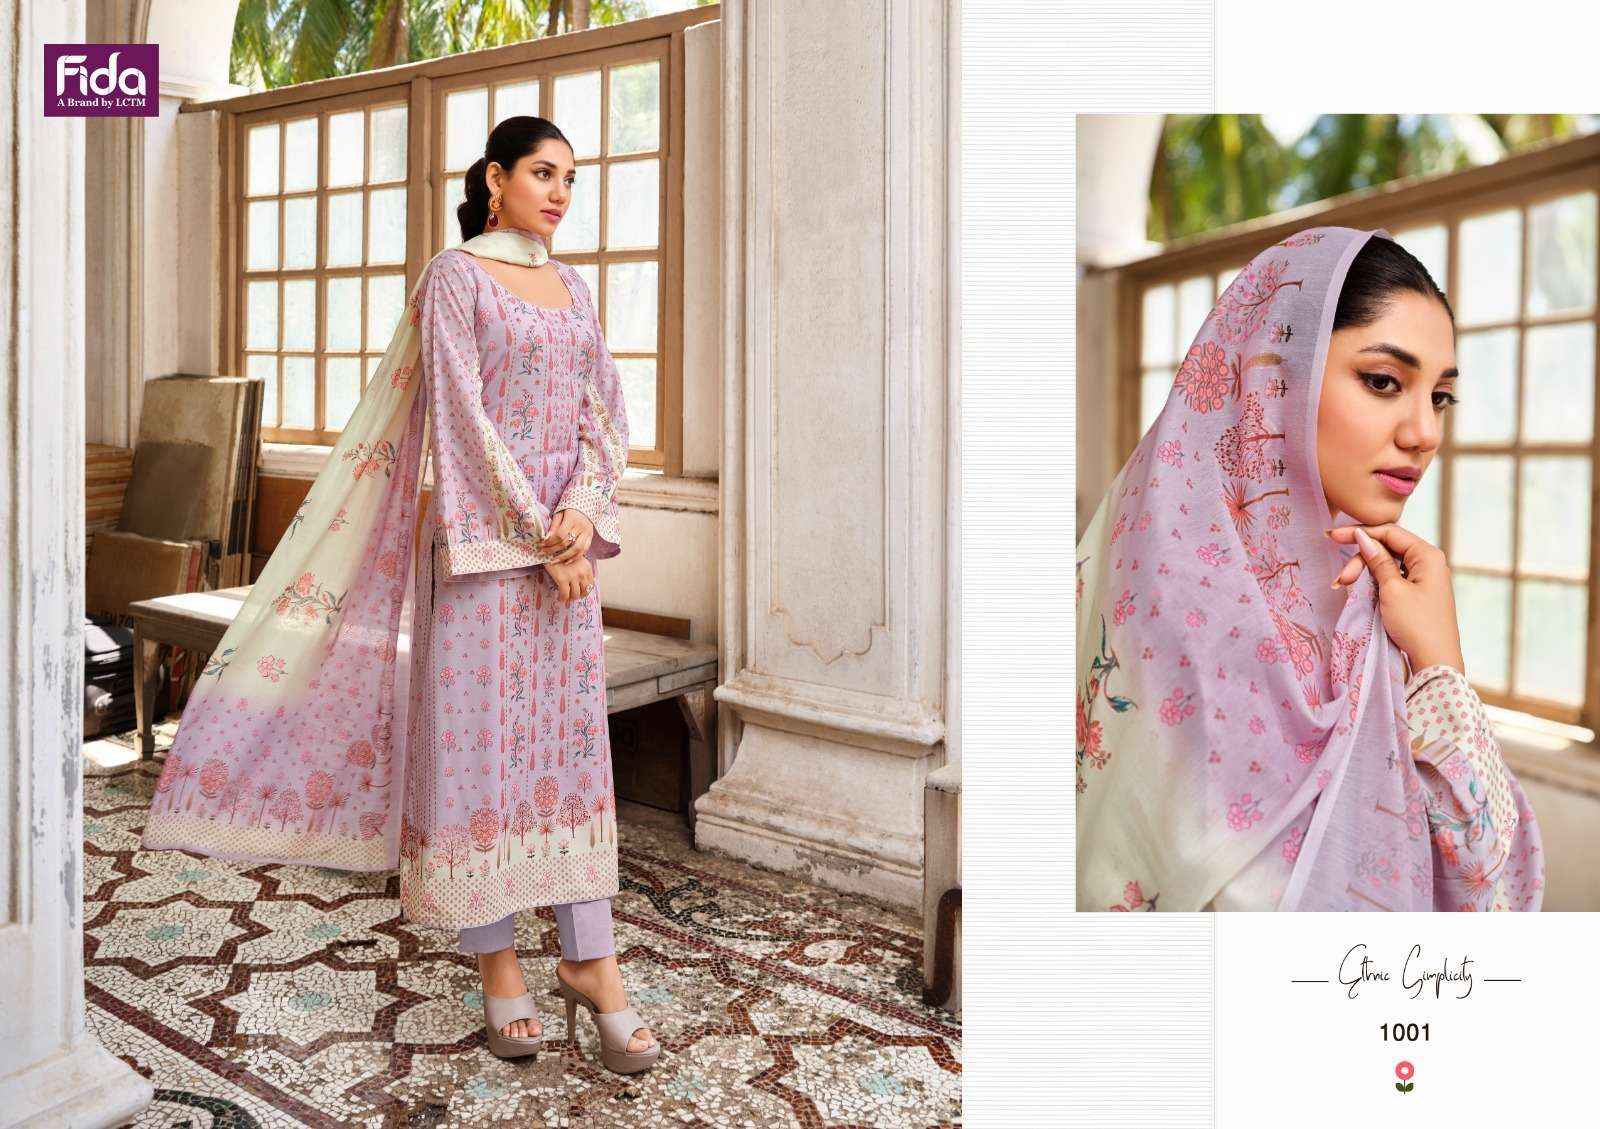 Fida Ruhi Cotton Dress Material 6 pcs Catalogue